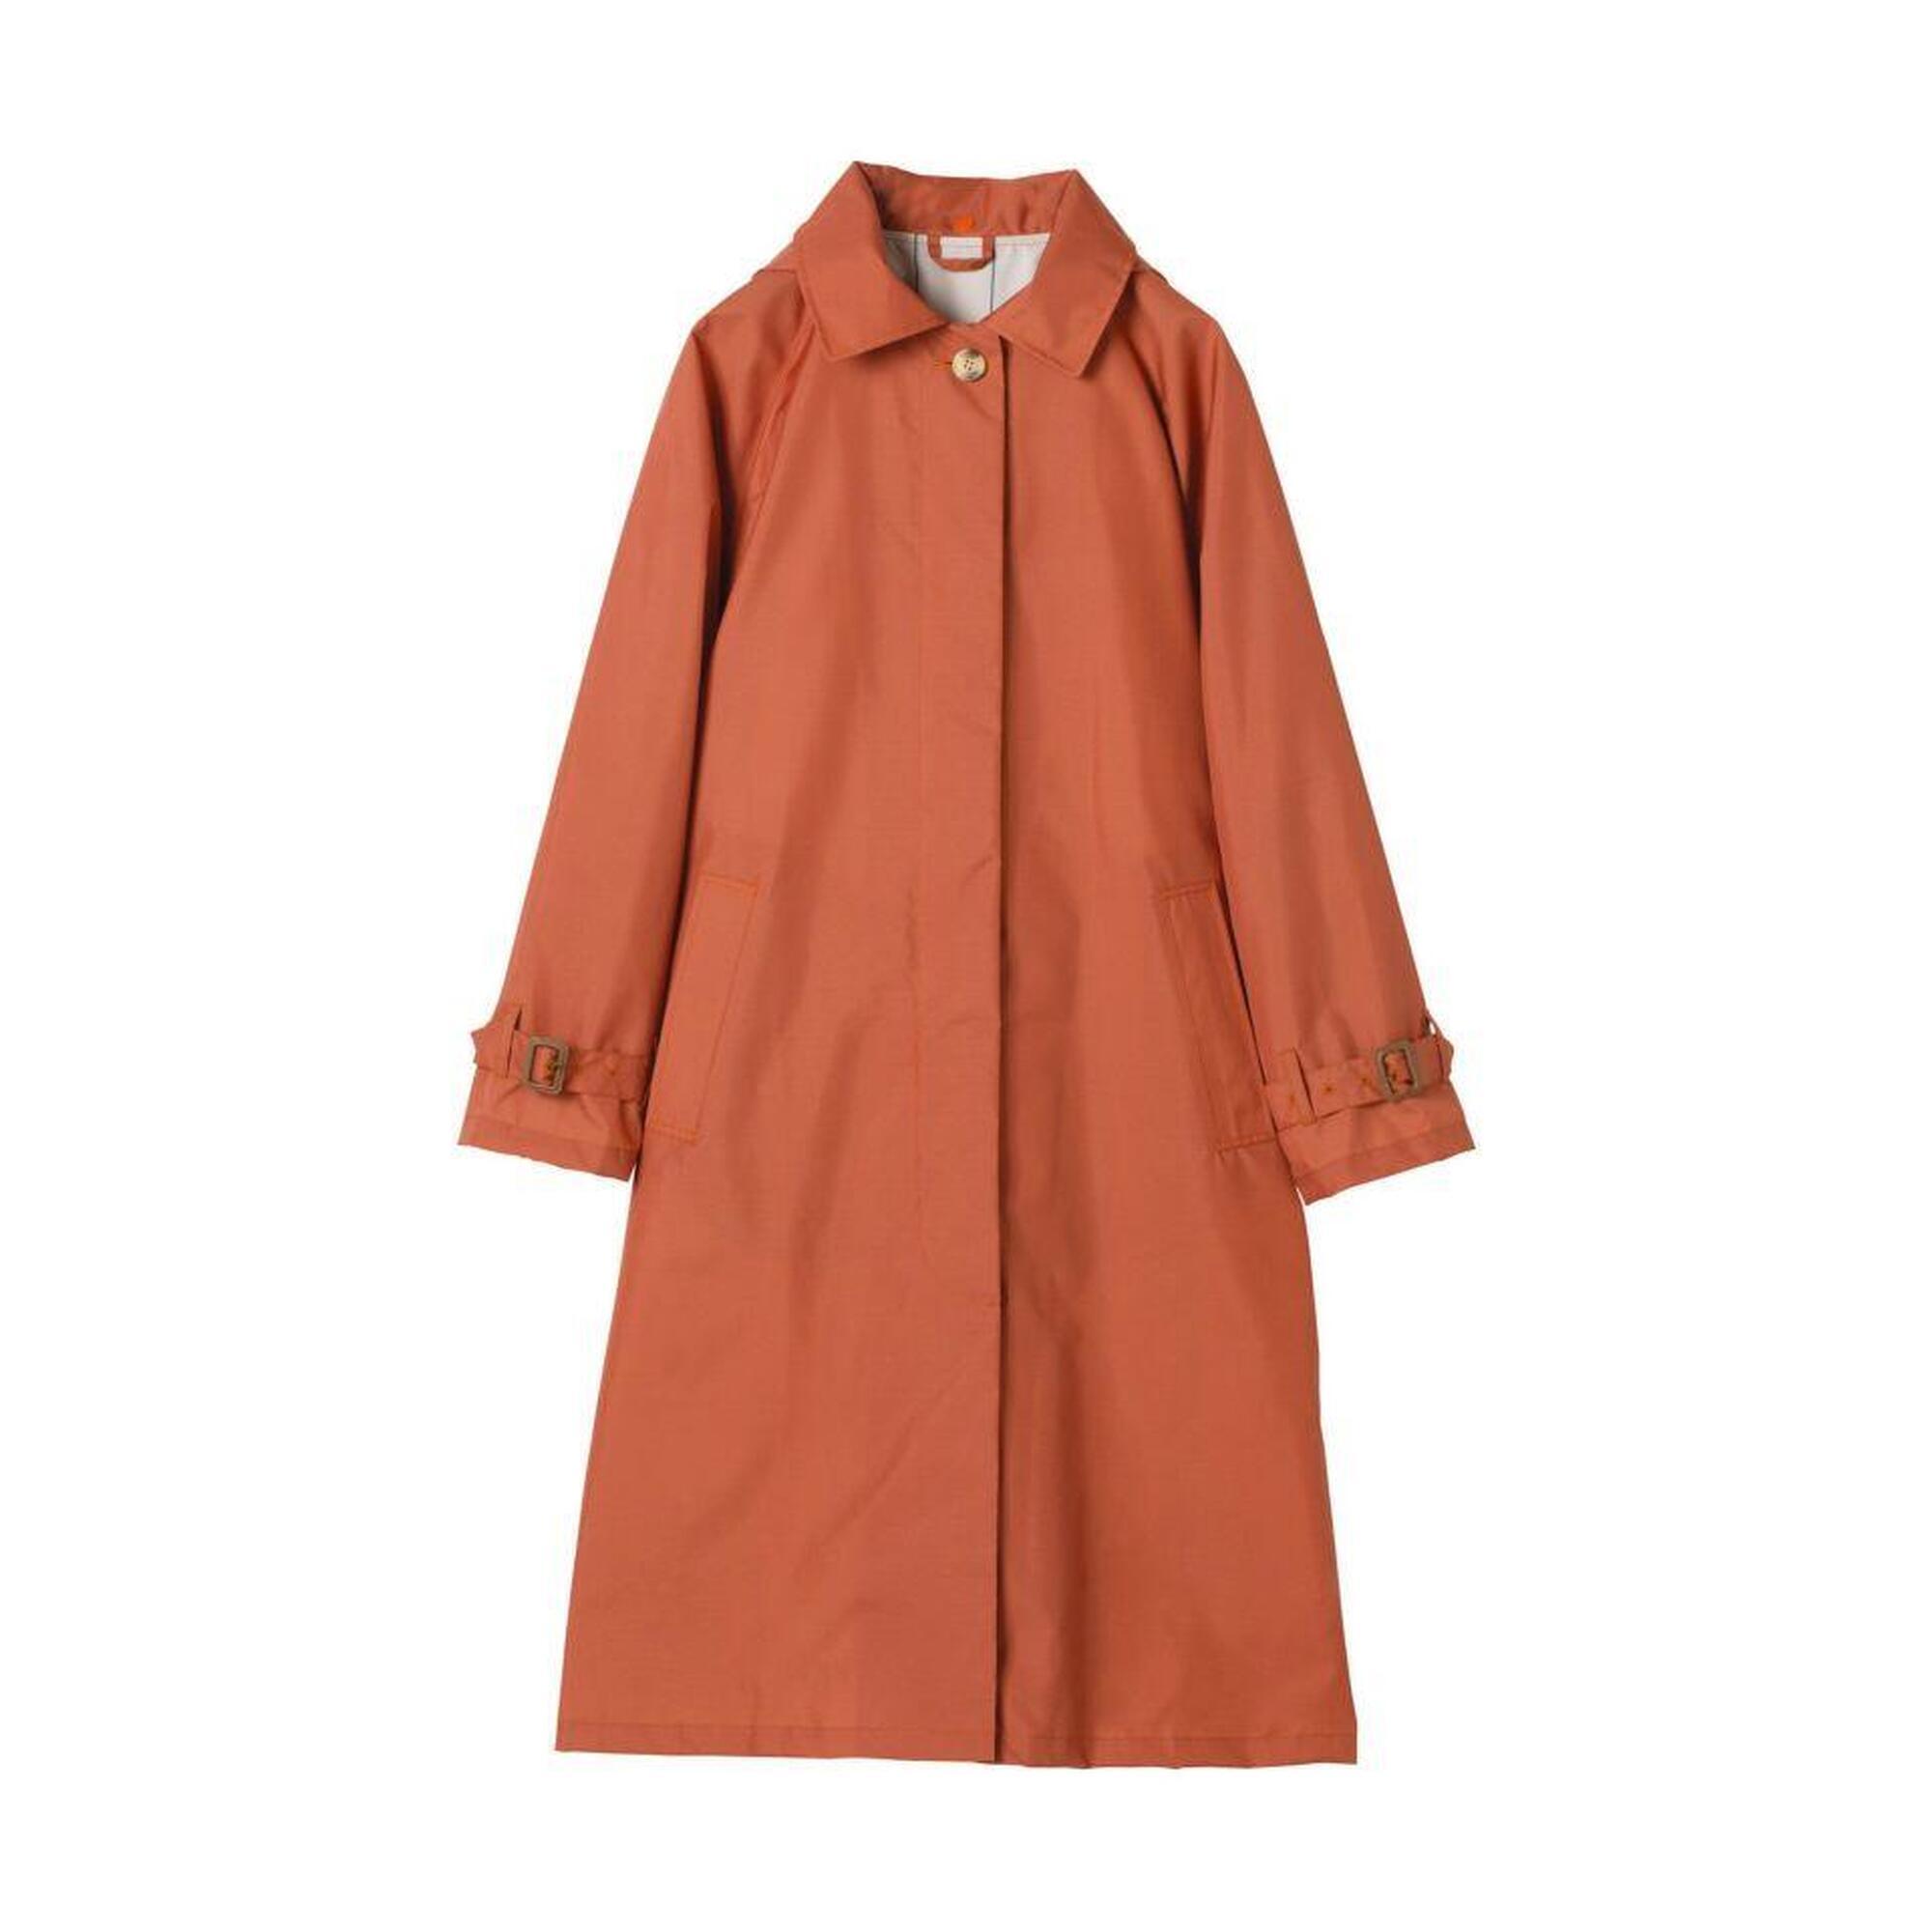 R1102 Top Raincoat - Orange (with storage bag)